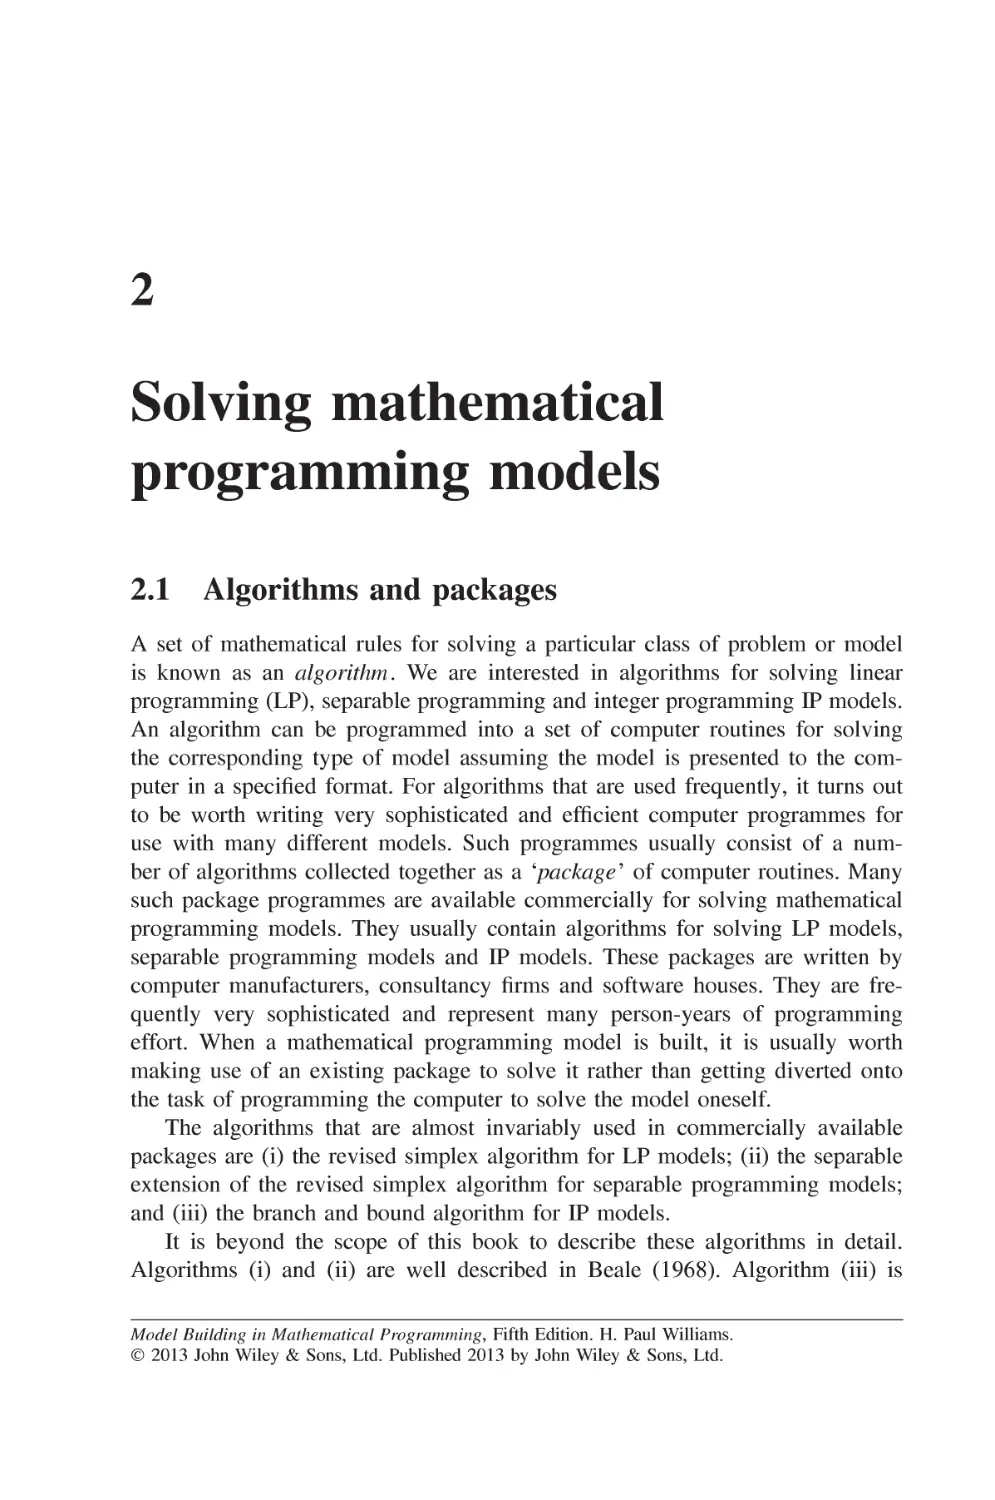 Chapter 2 Solving mathematical programming models